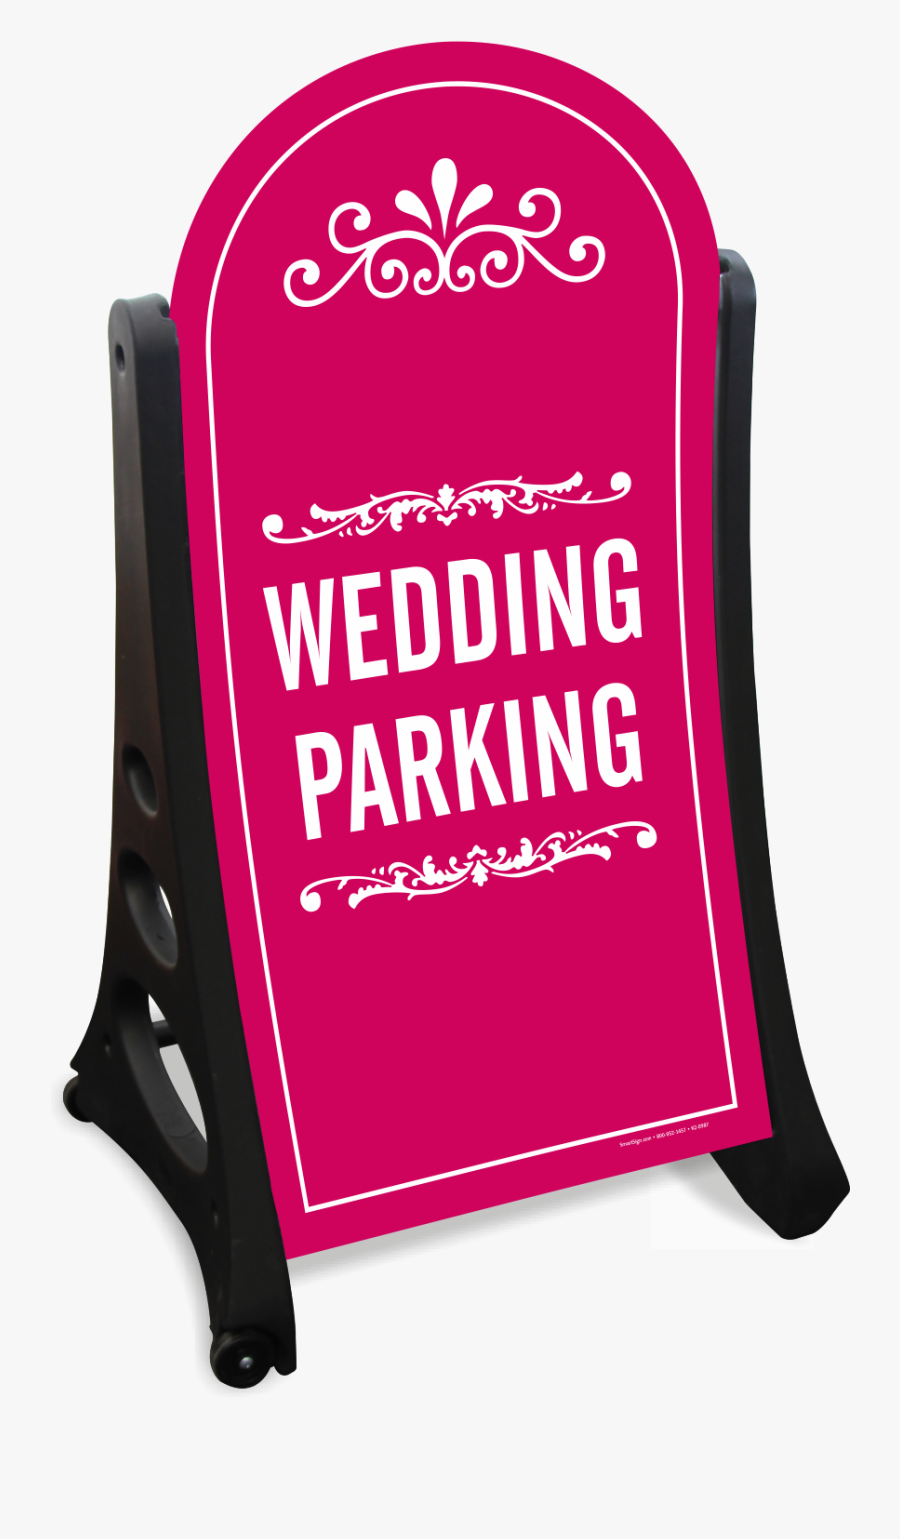 Wedding Parking Dome-shaped Sidewalk Sign - Parking, Transparent Clipart